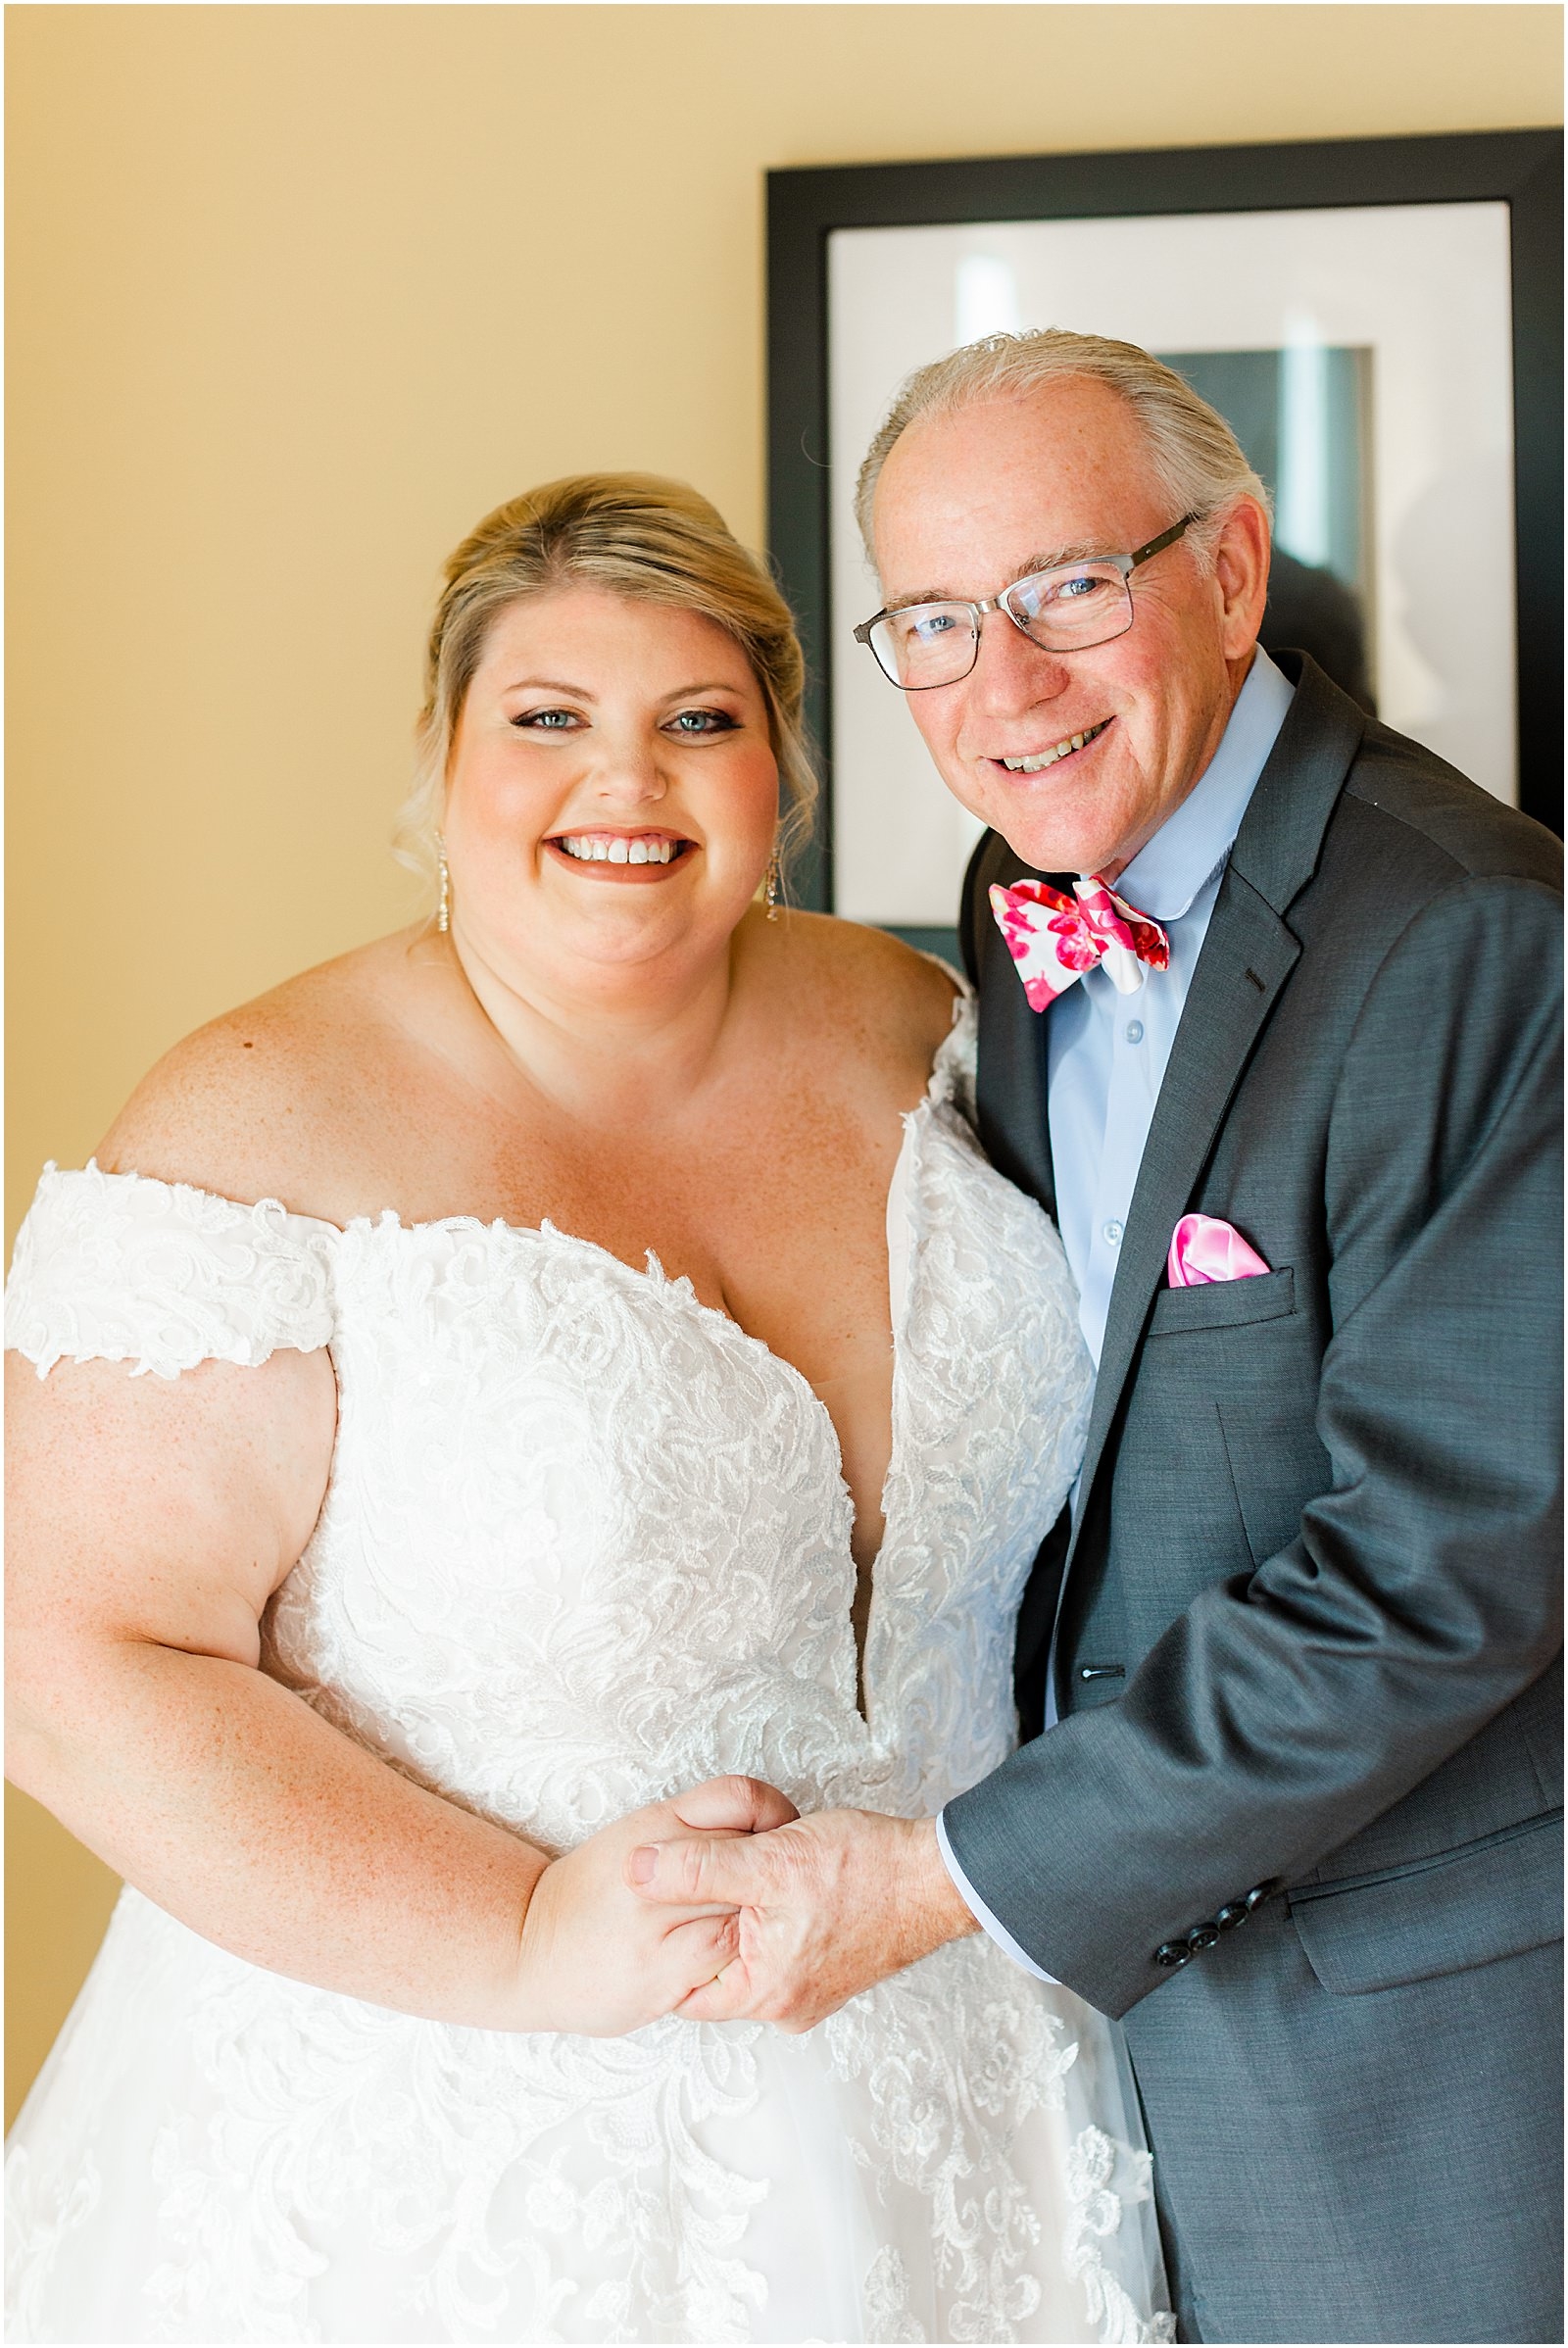 Brittany and Neil's Wedding at Neu Chapel Bret and Brandie | Evansville Photographers | @bretandbrandie-0036.jpg